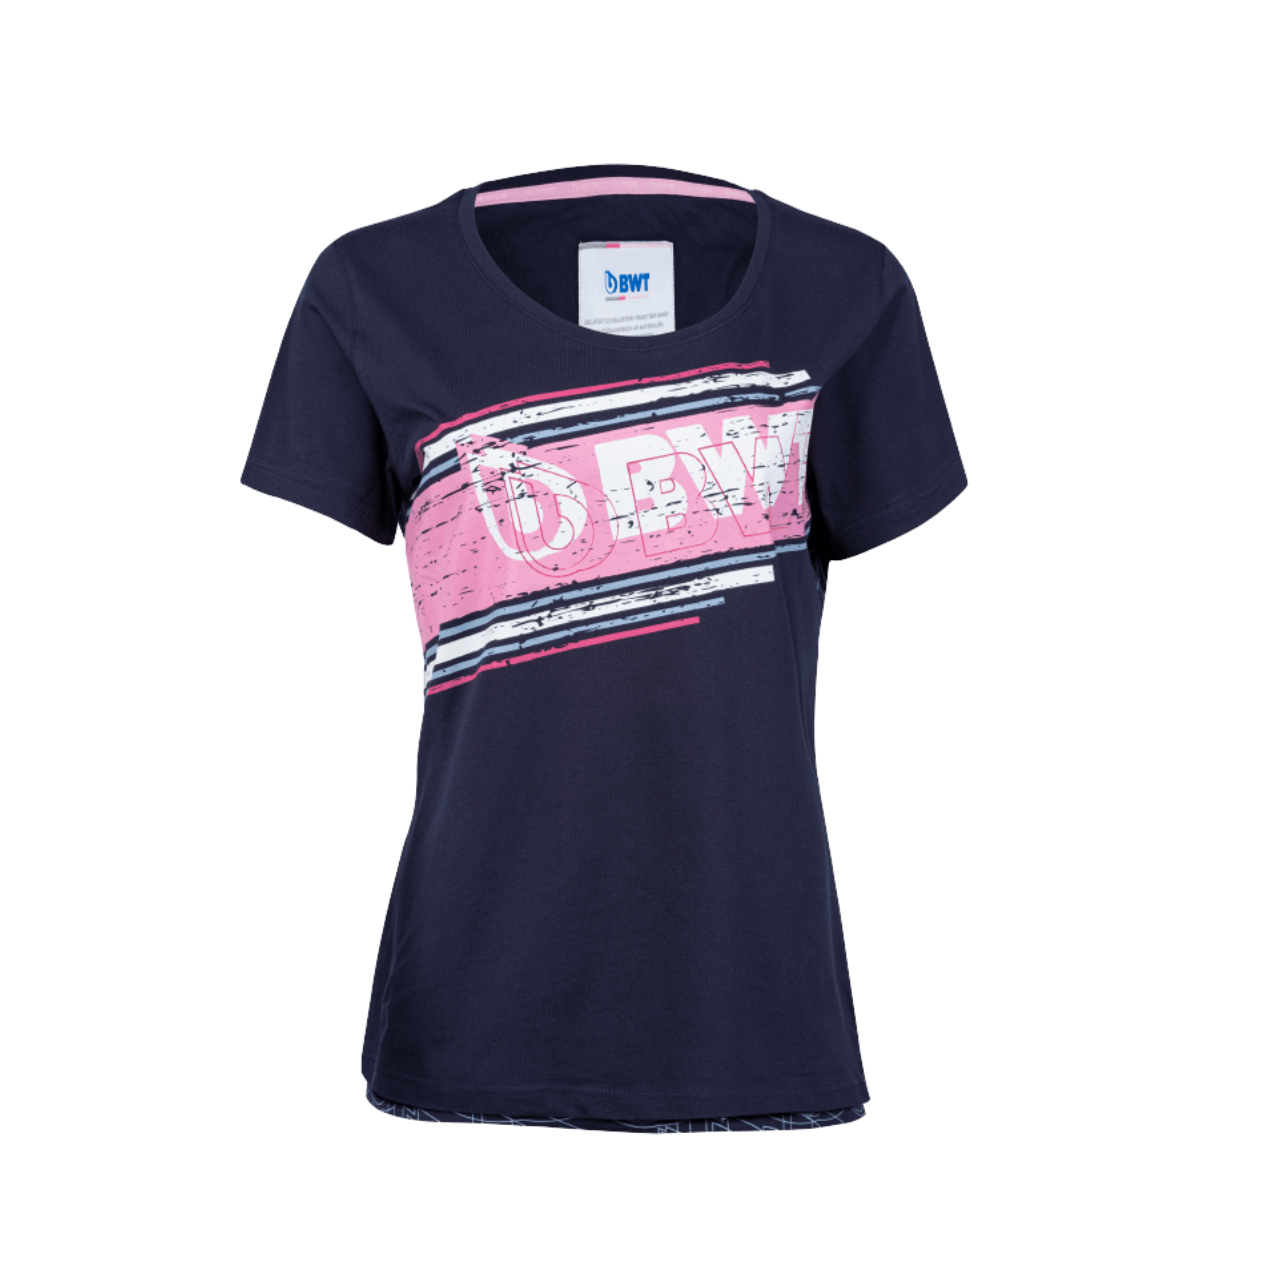 BWT Lifestyle T-Shirt Damend blauw met roze opdruk en wit BWT-logo op de borst